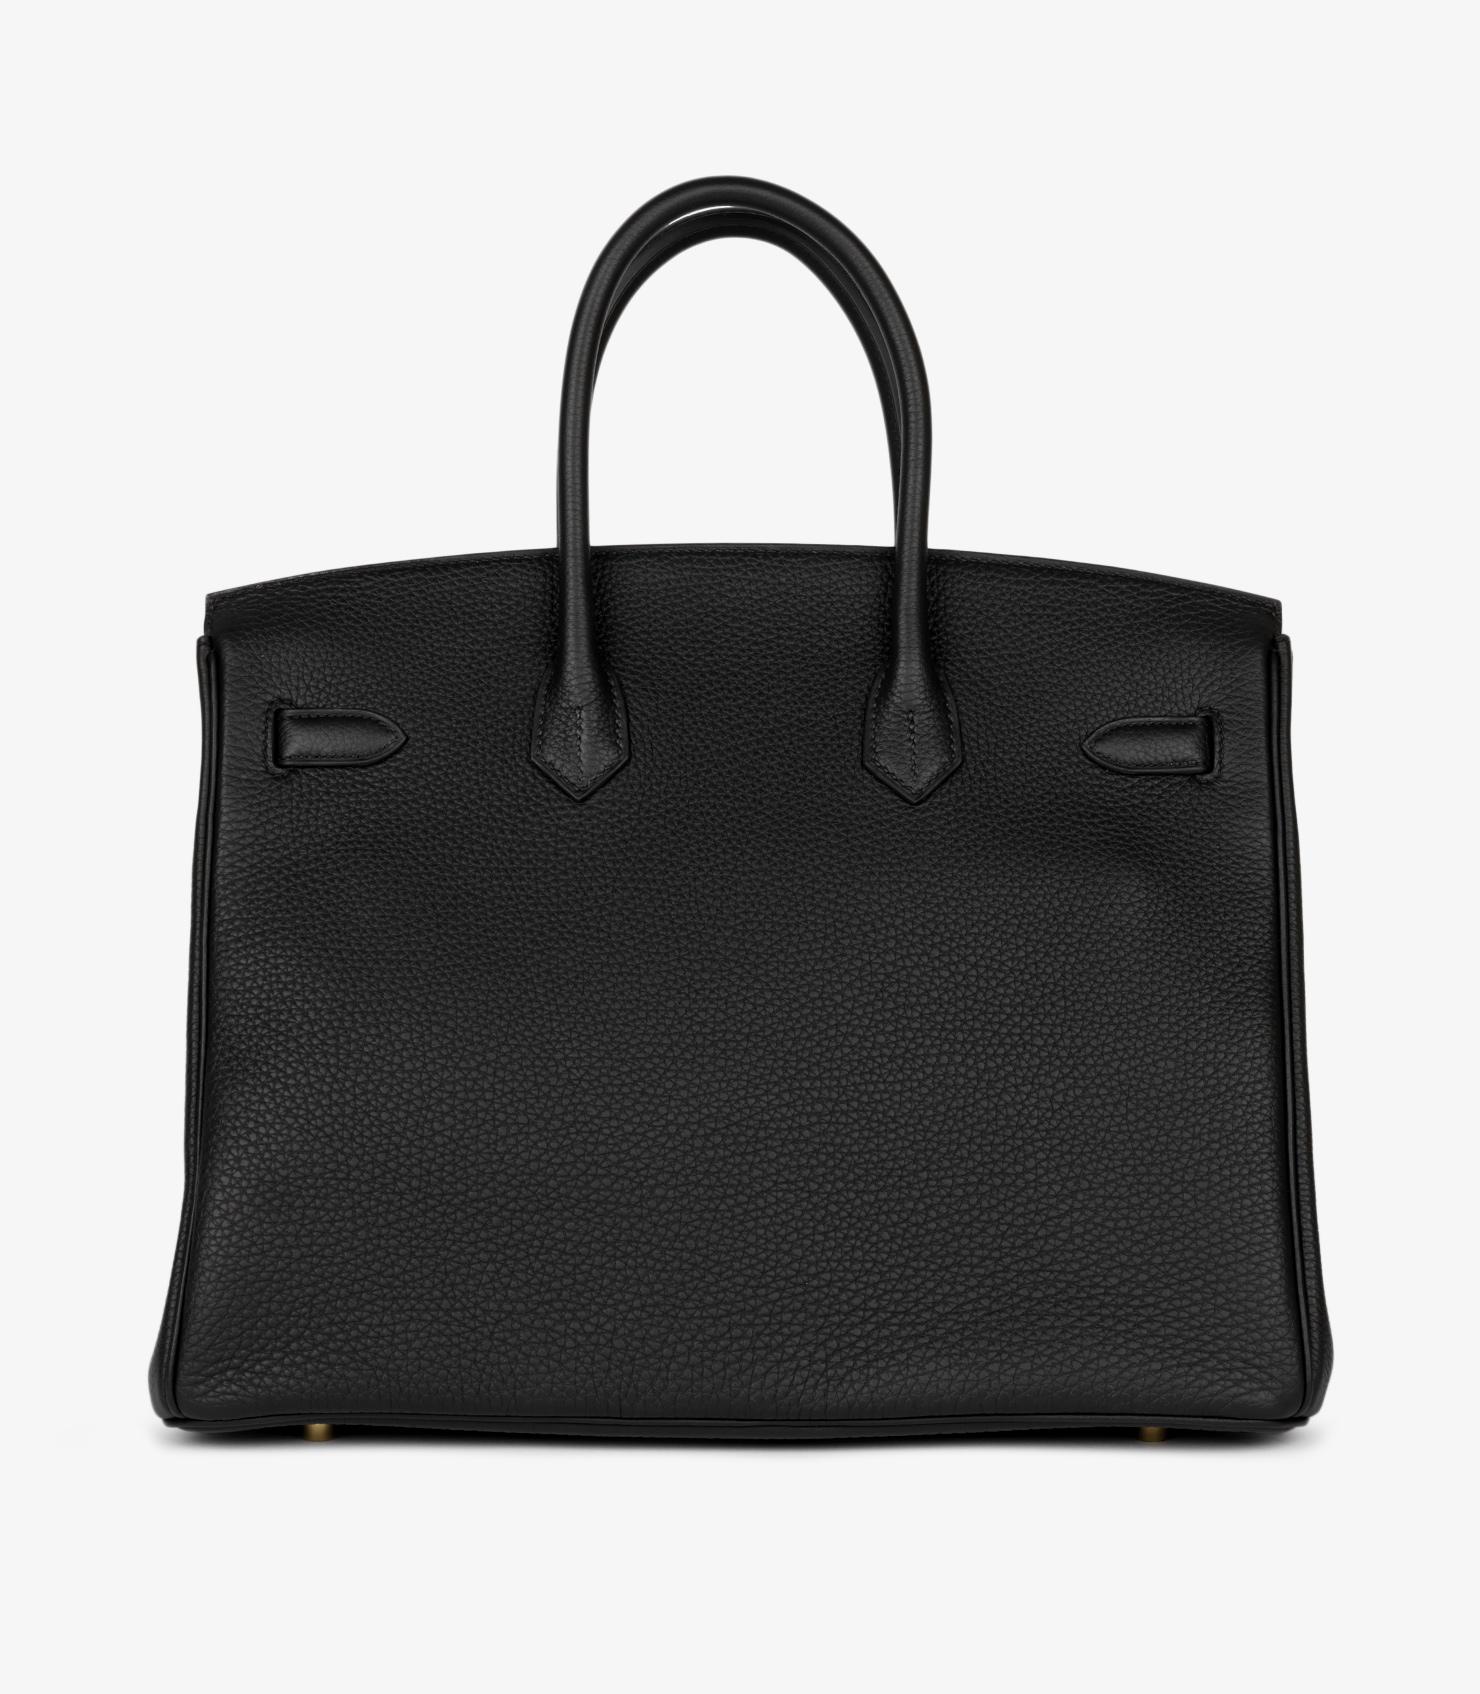 Hermès Black Togo Leather Birkin 35cm 1